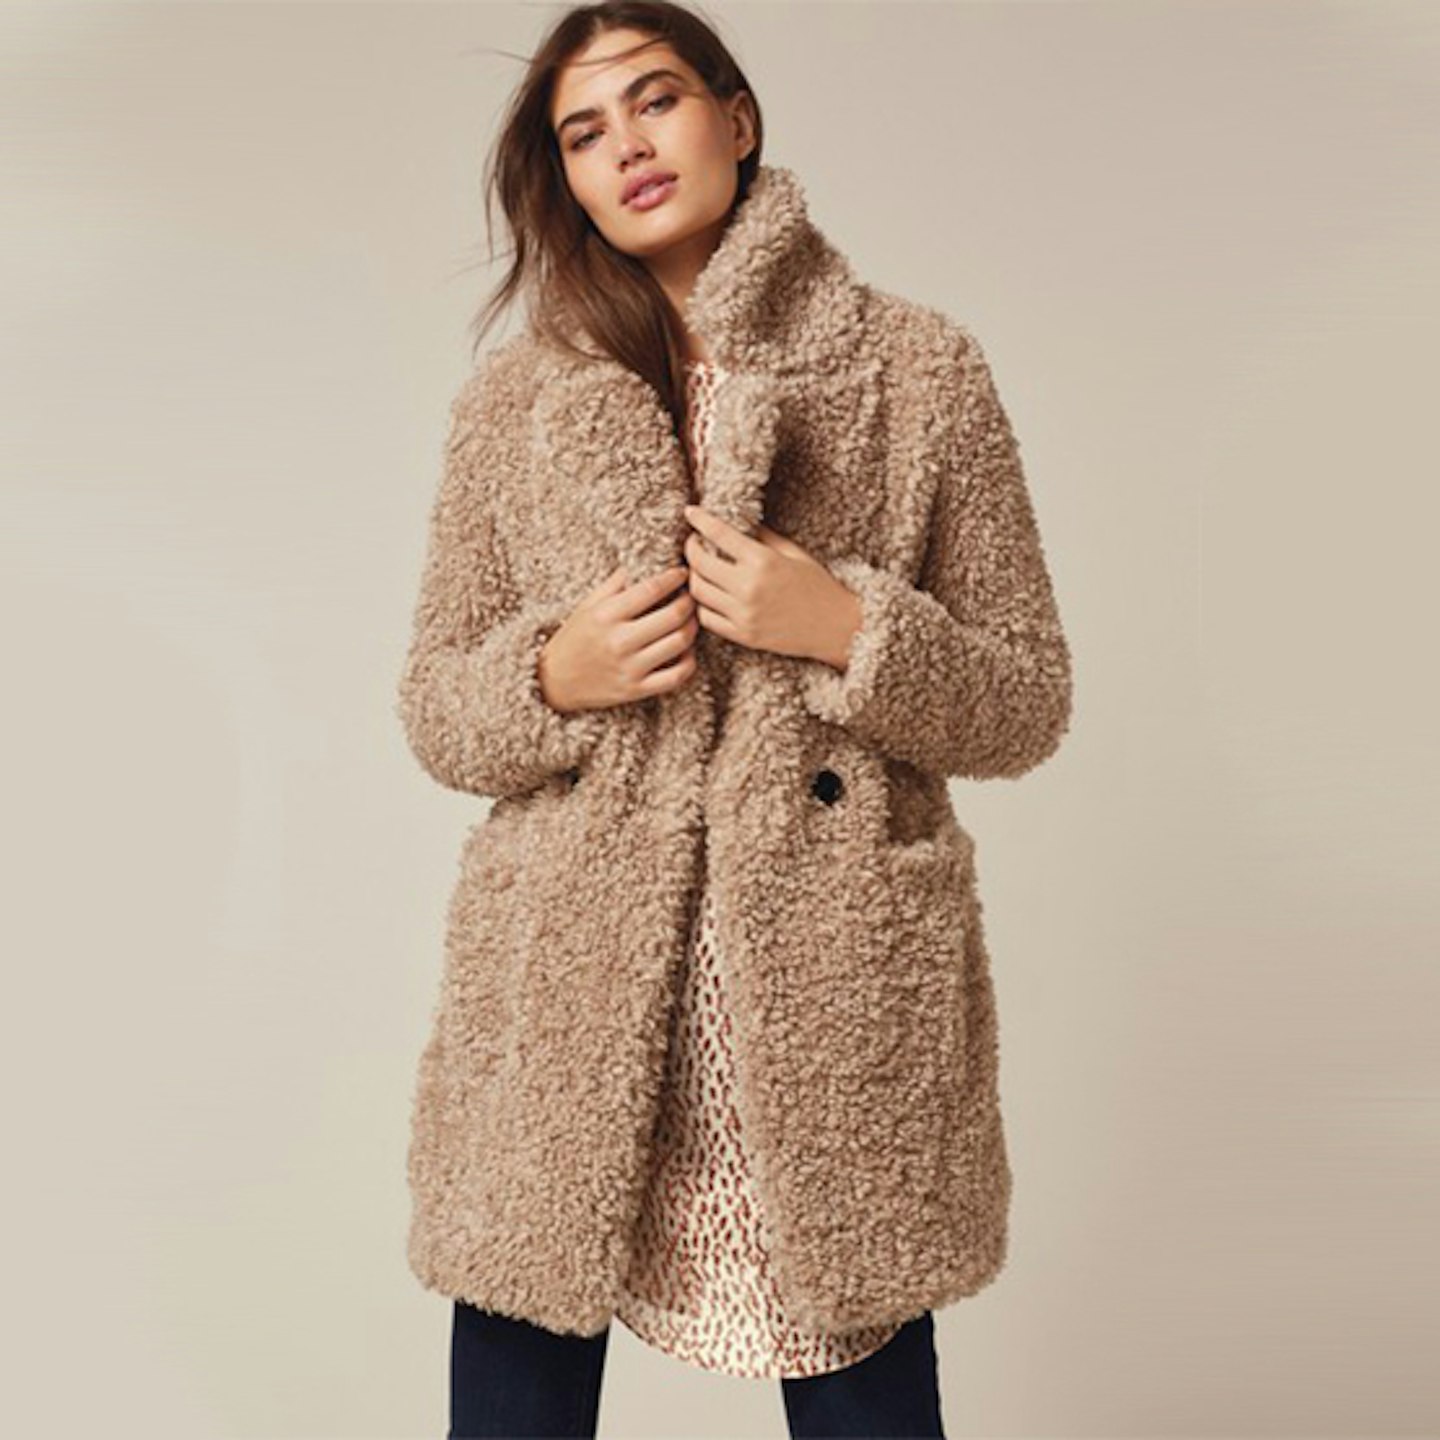 Best winter coats for women | Life | Yours